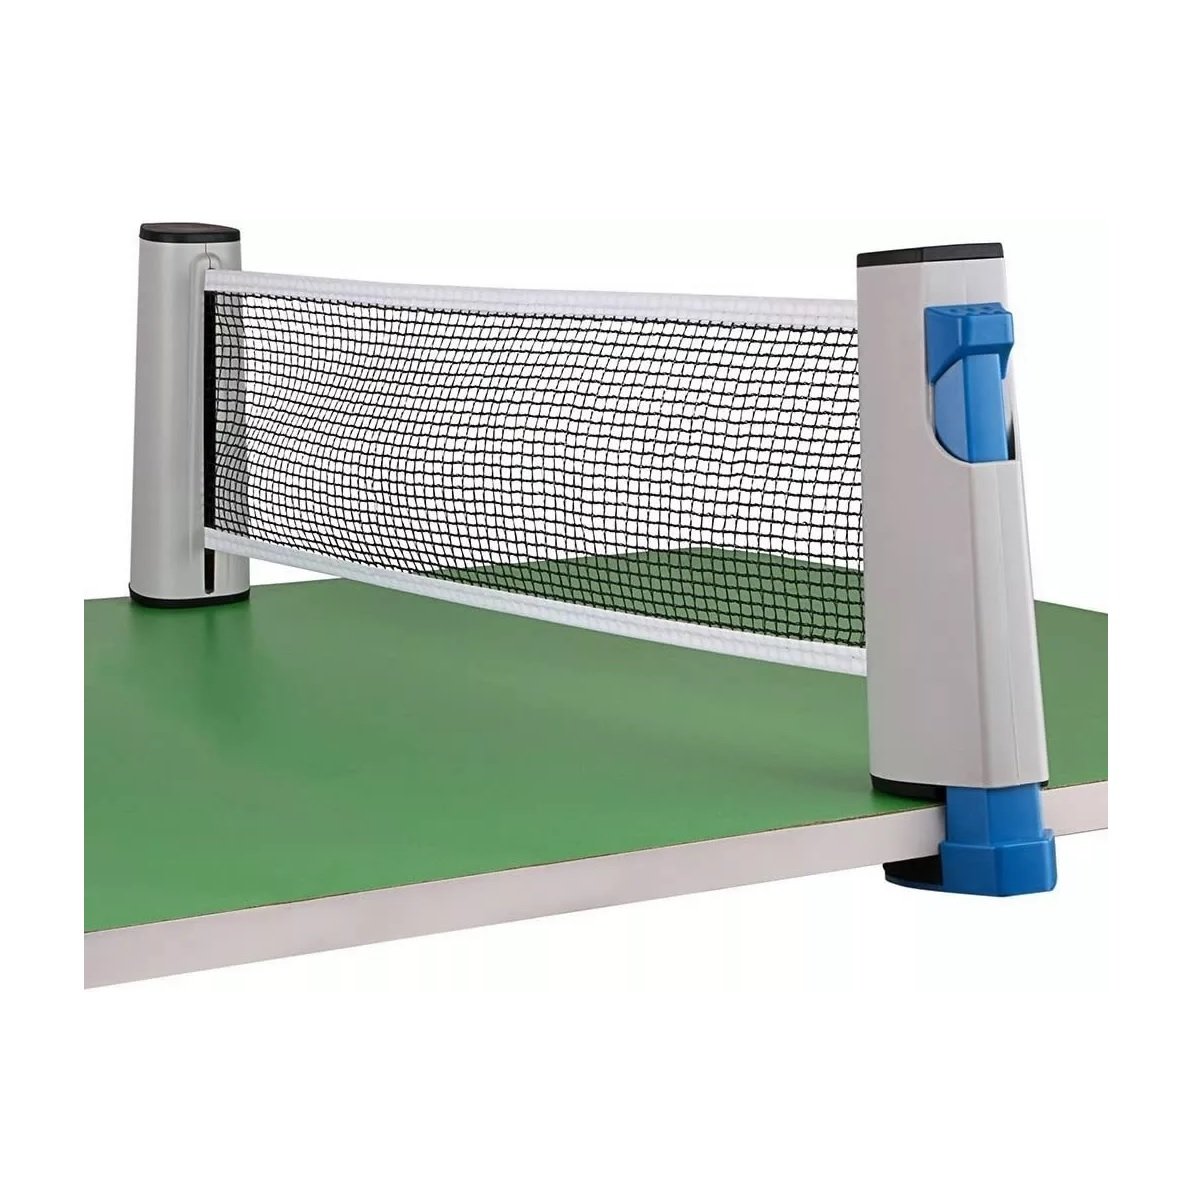 Red Para Ping Pong 1.8m Ajustable Portátil Tenis De Mesa